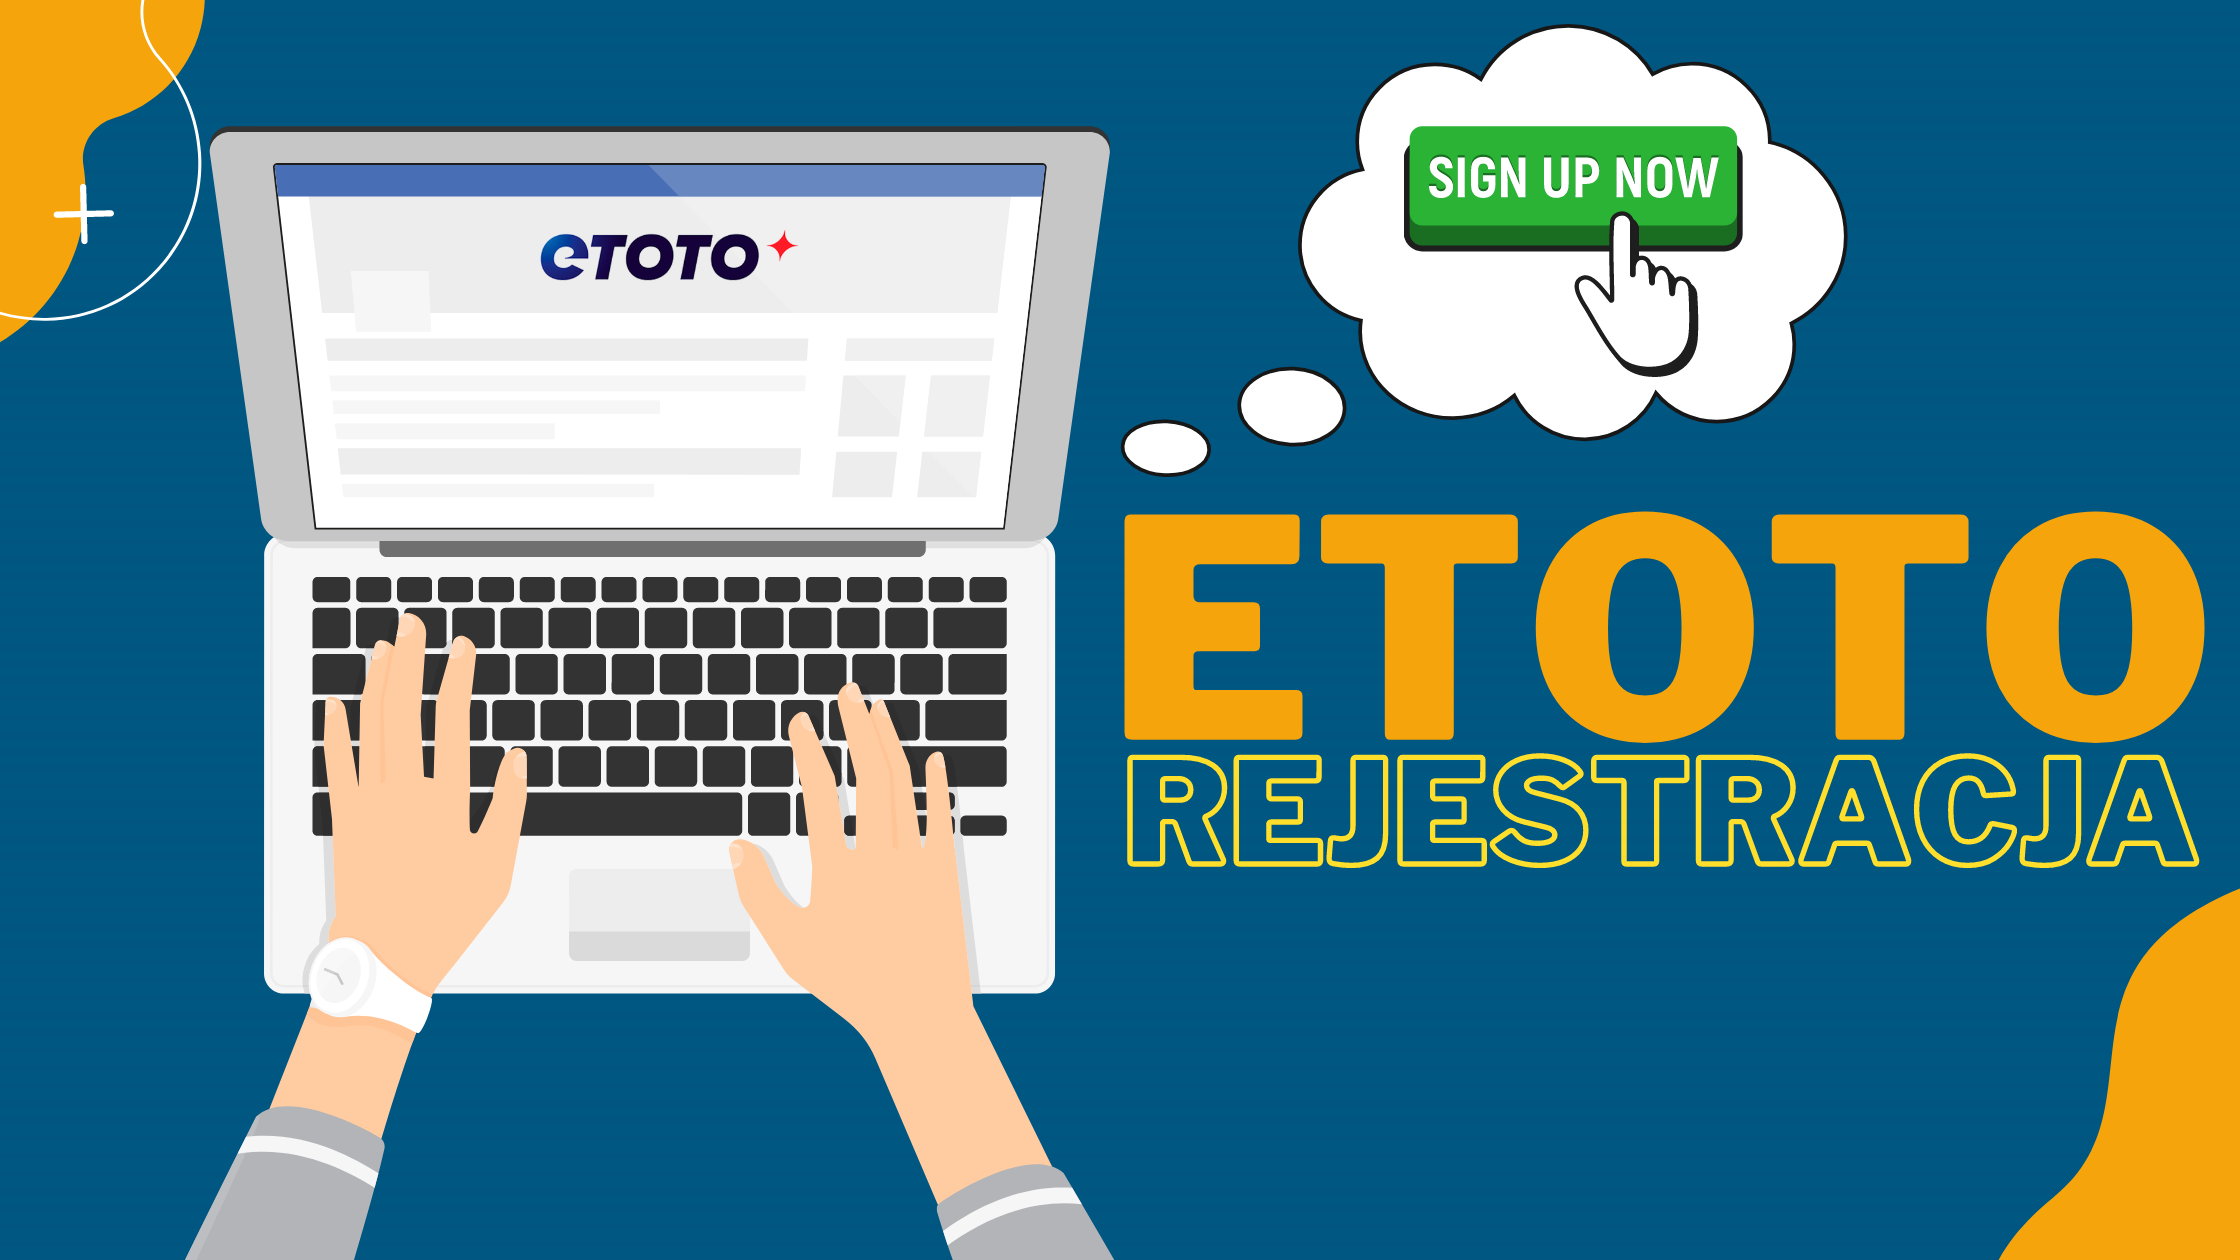 Rejestracja na Etoto krok po kroku